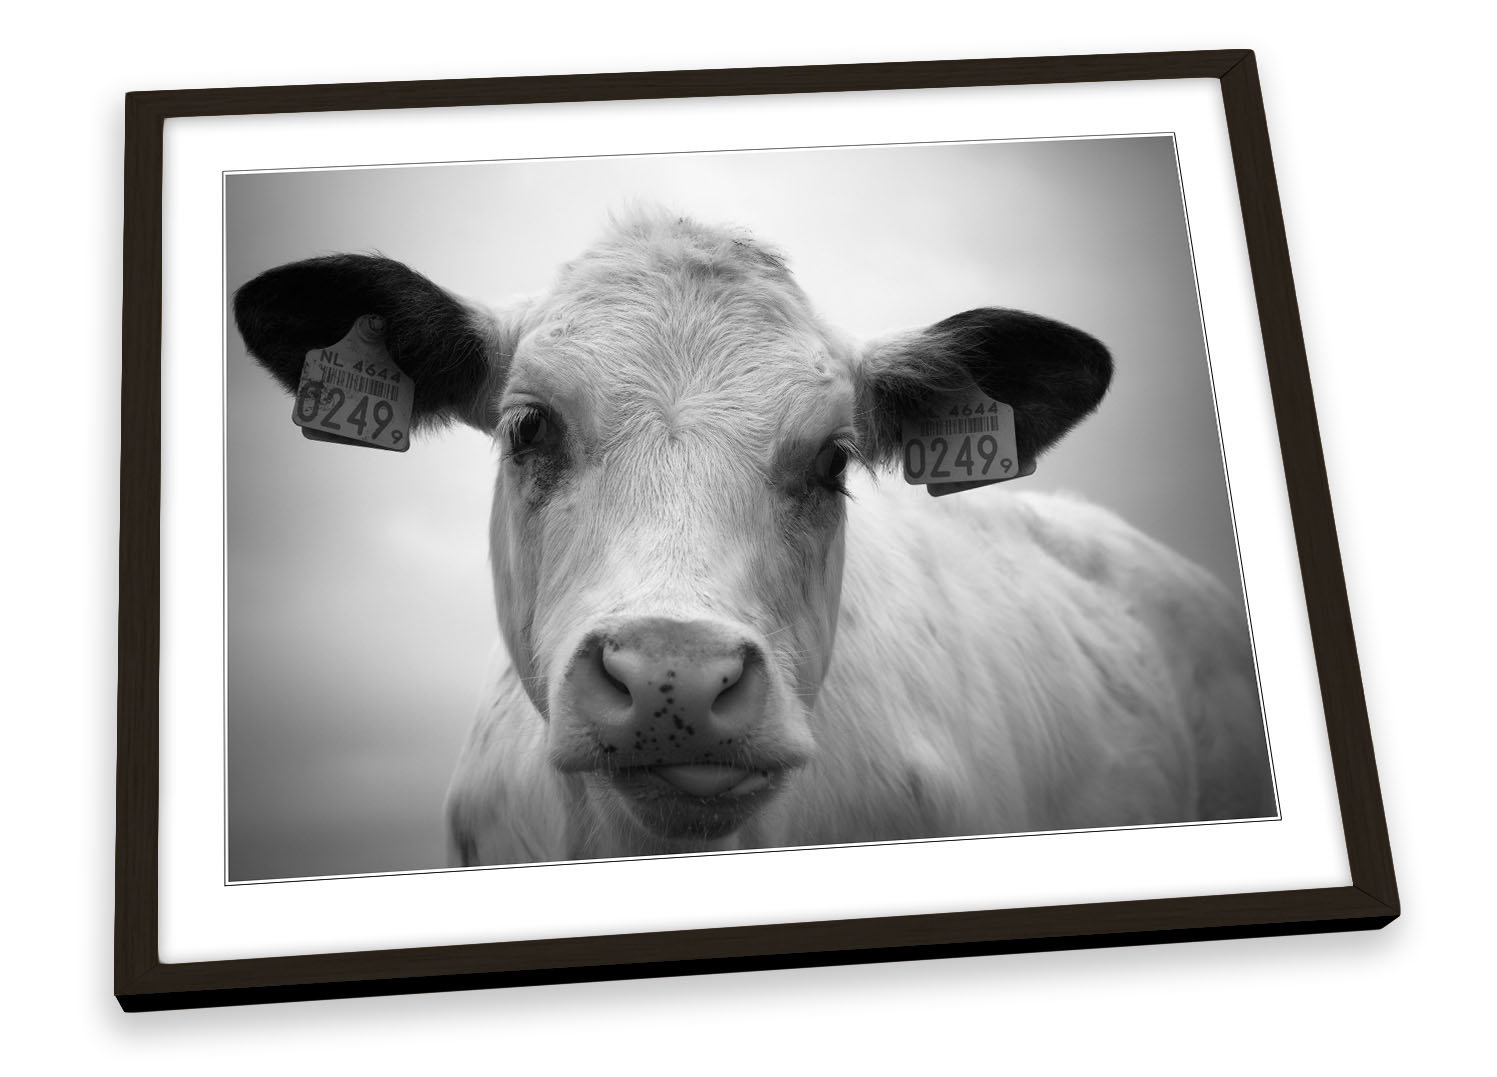 Farm Cow Face B&W FRAMED ART PRINT Picture Poster Artwork | eBay